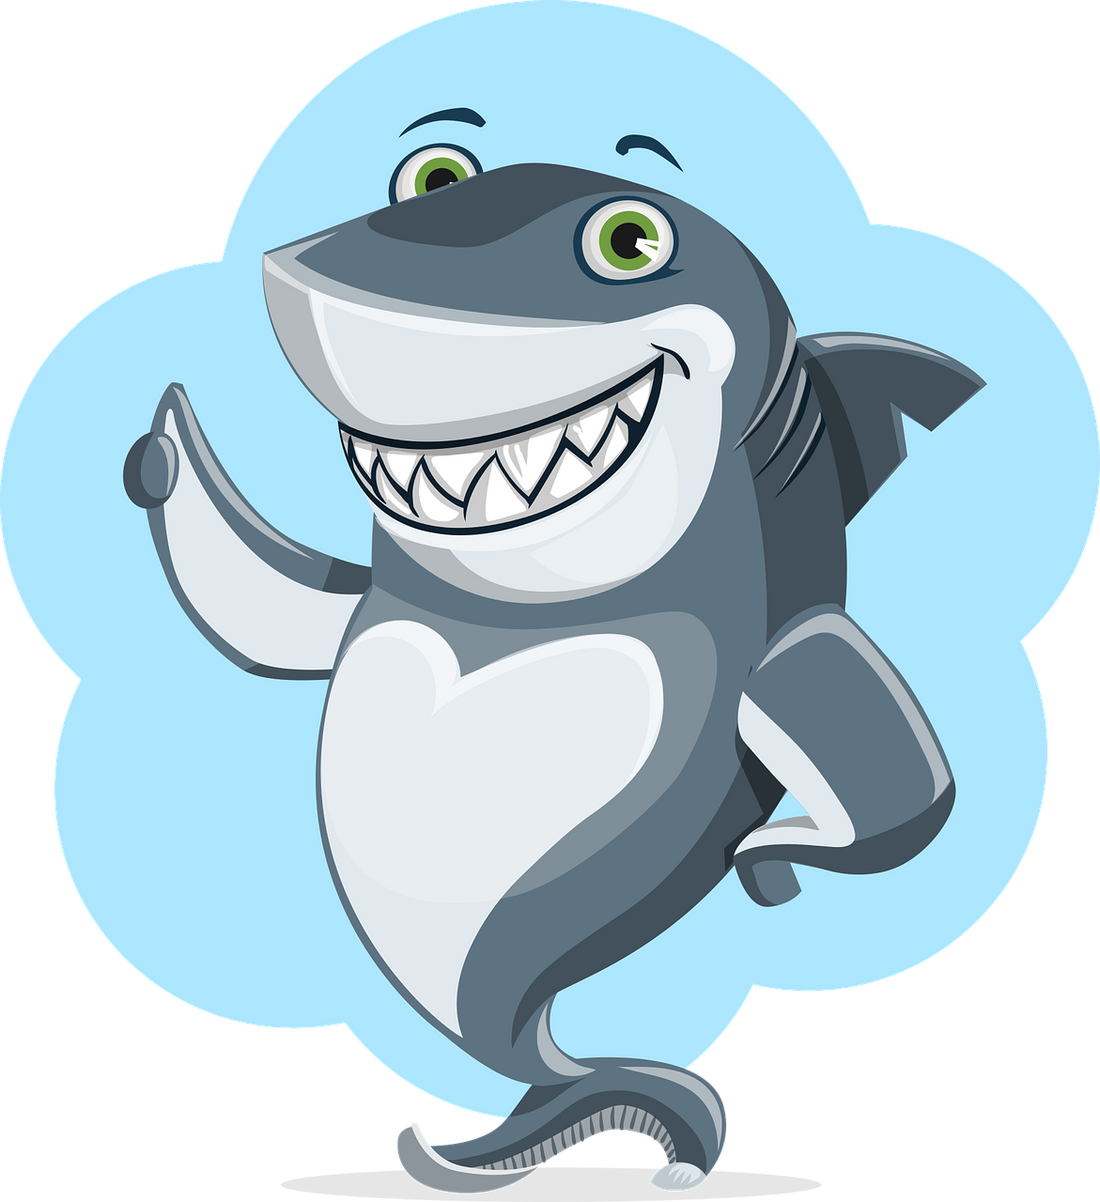 A Smiling Shark Cartoon